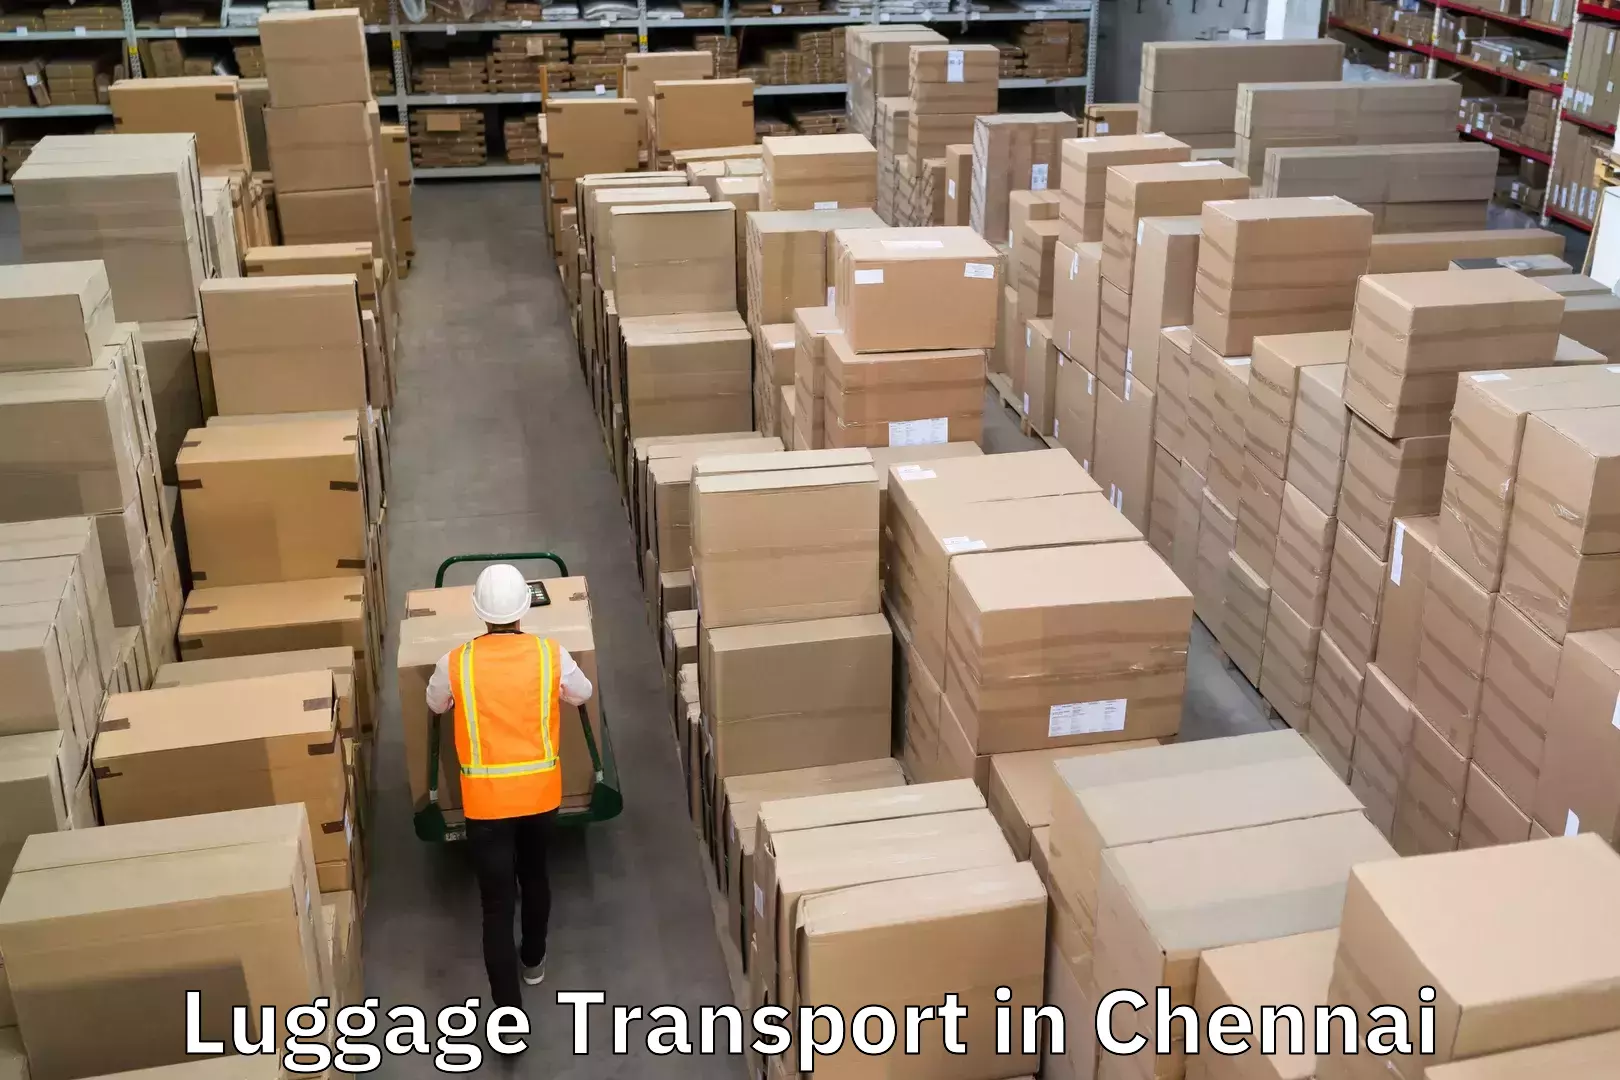 Domestic luggage transport in Chennai